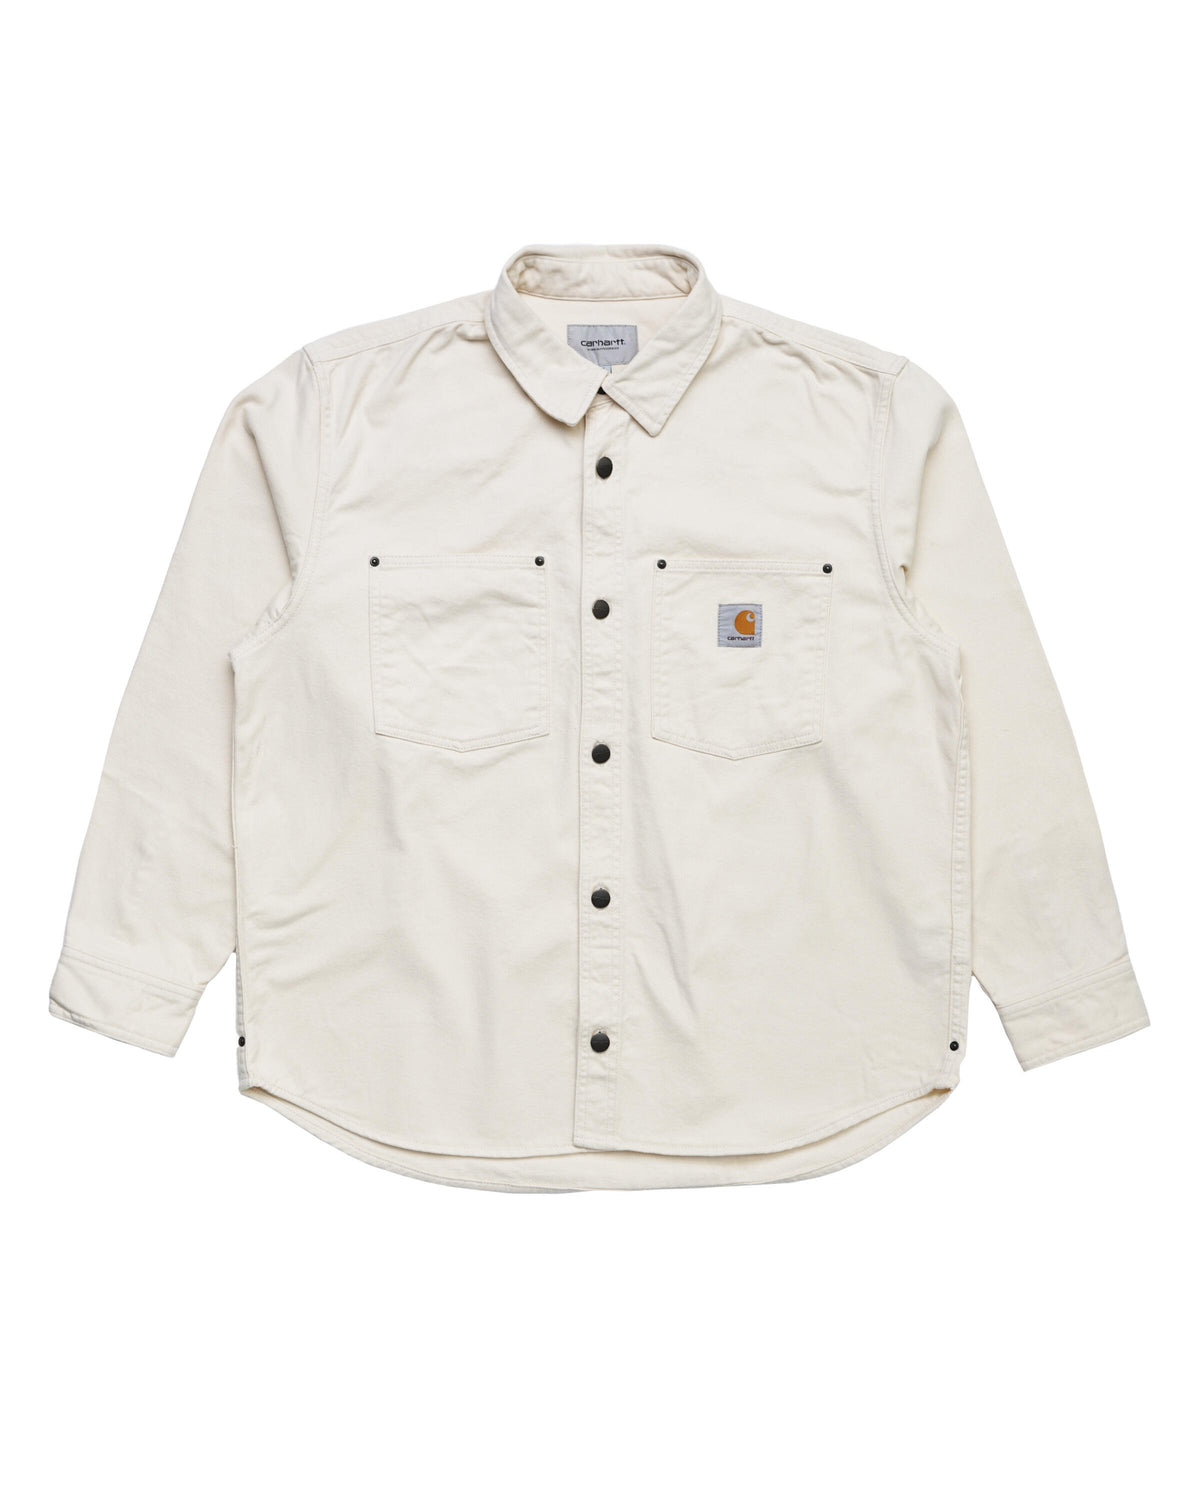 Carhartt WIP Derby Shirt Jacket